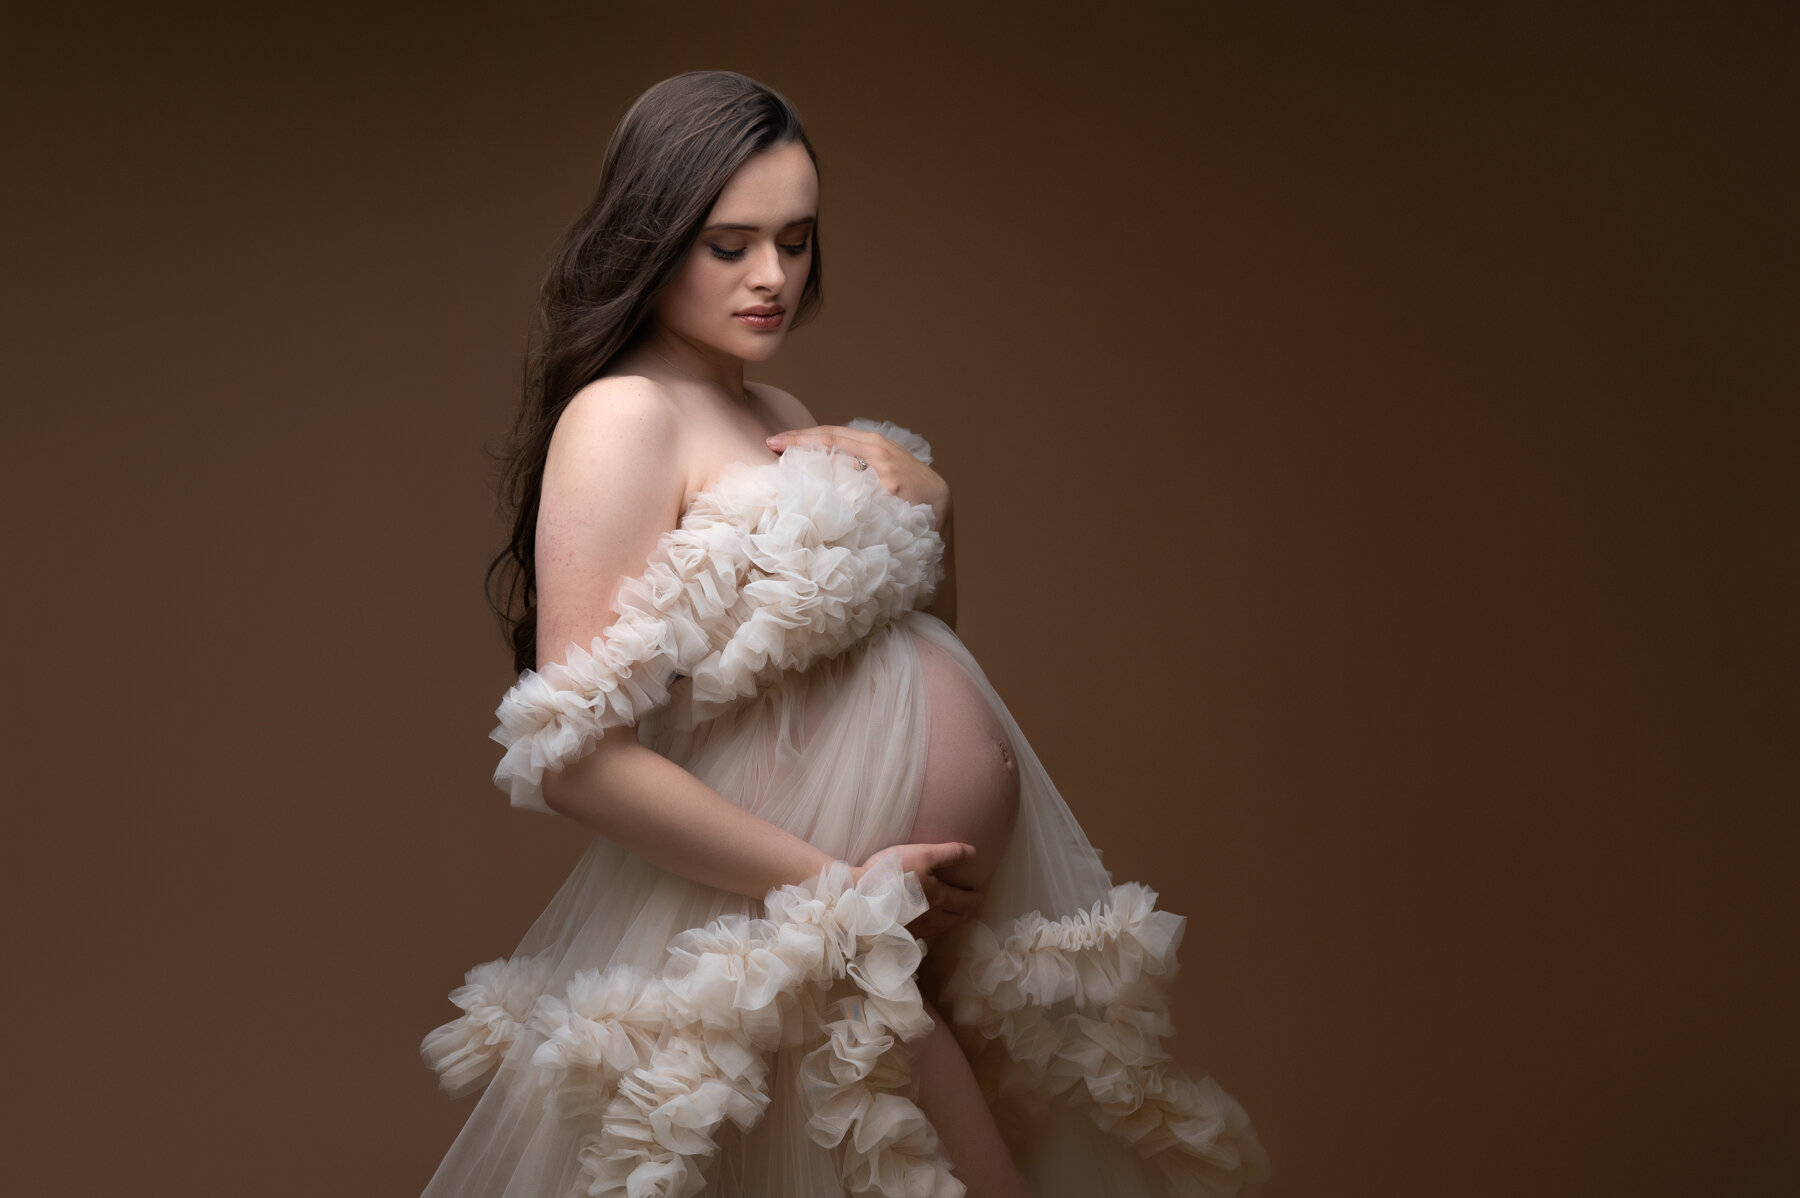 Colulmbus-ohio-maternity-photographer-pregnancy-photos-newalbany-hilliard-dublin-powell-portraits7.jpg